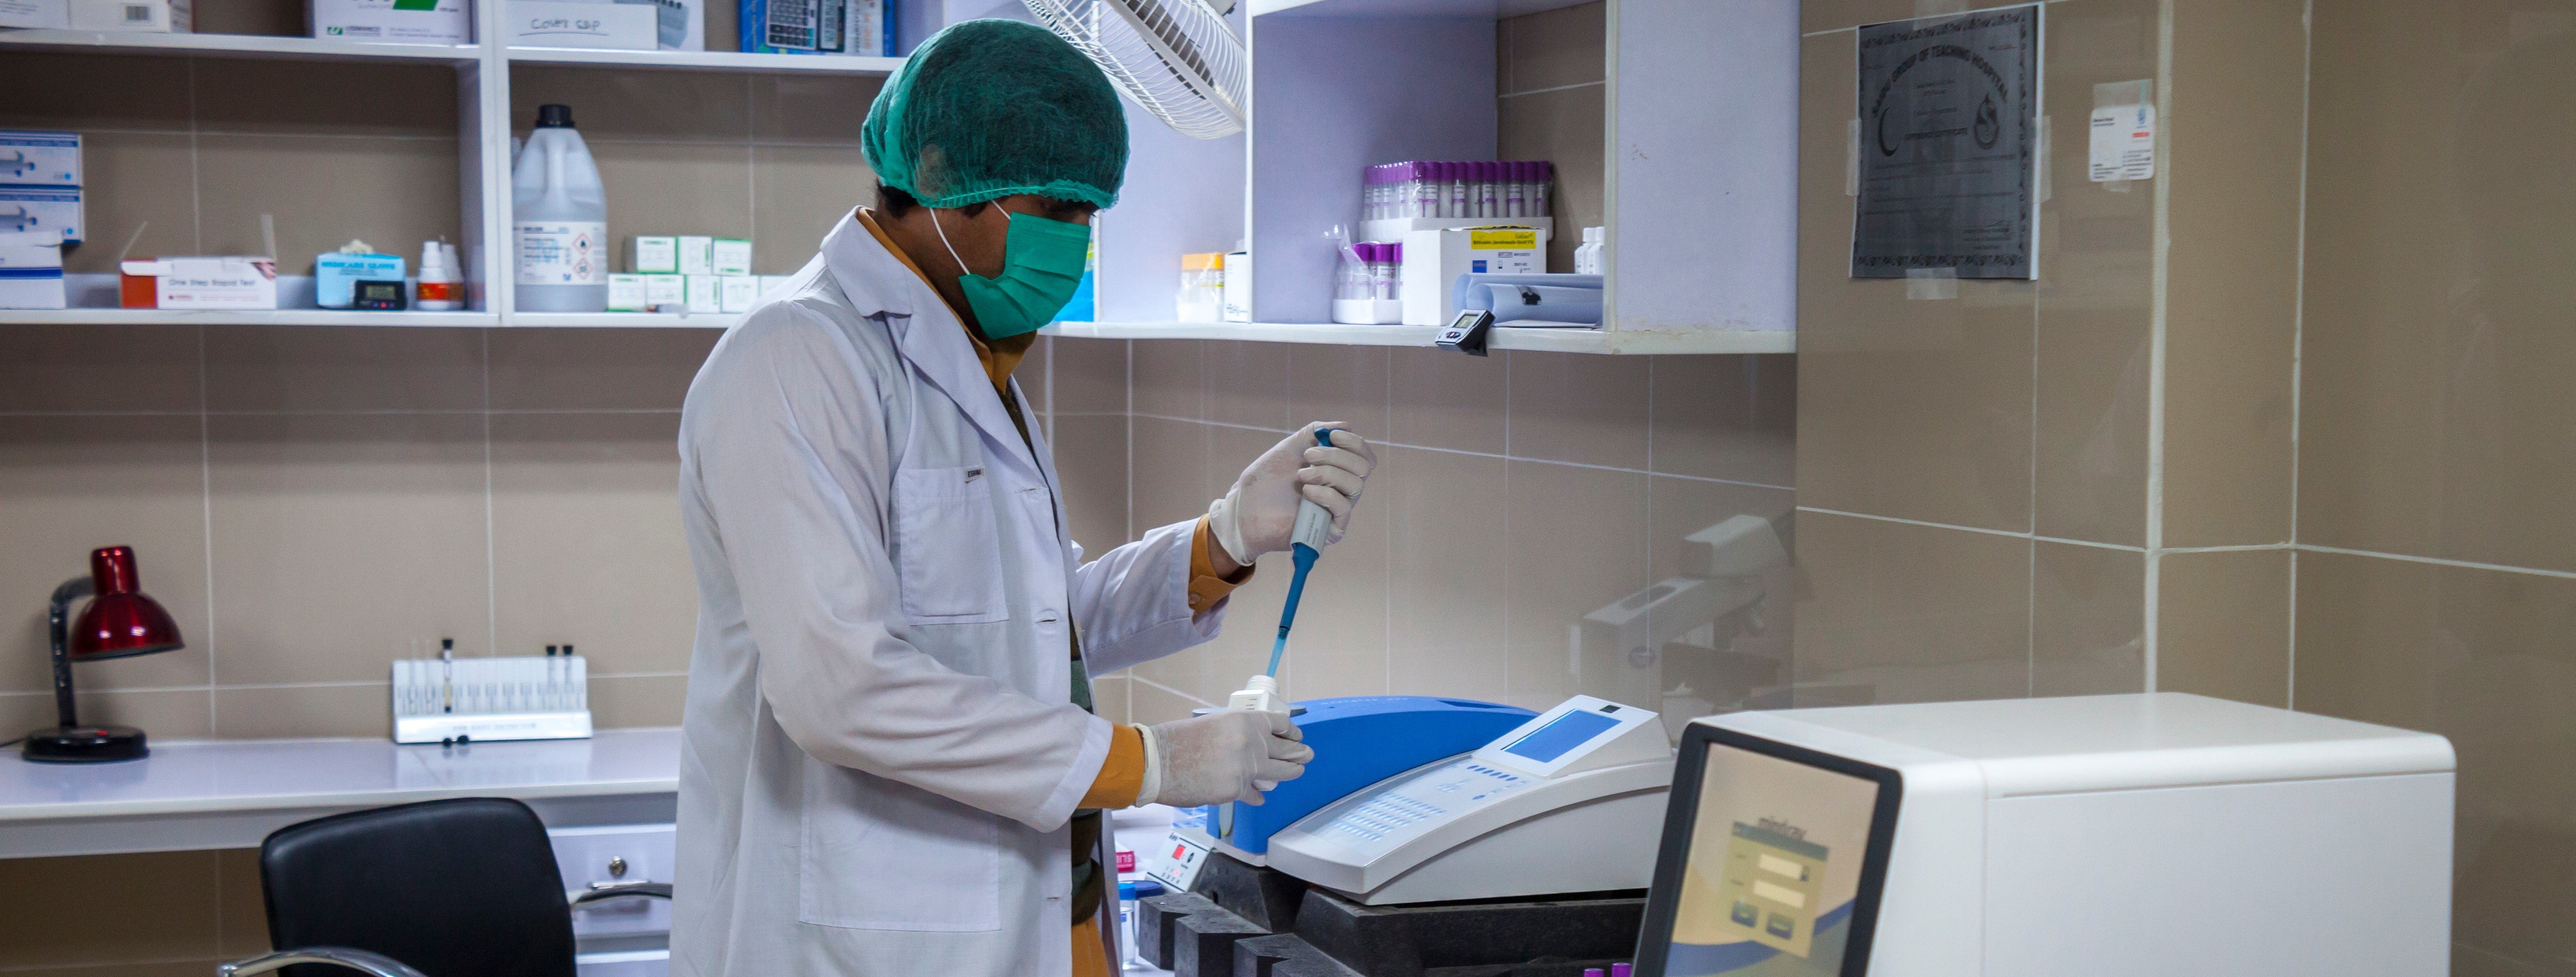 Un technicien de laboratoire au sein d'un hôpital. Photo : © Tariq siddiq Kohistani/Shutterstock